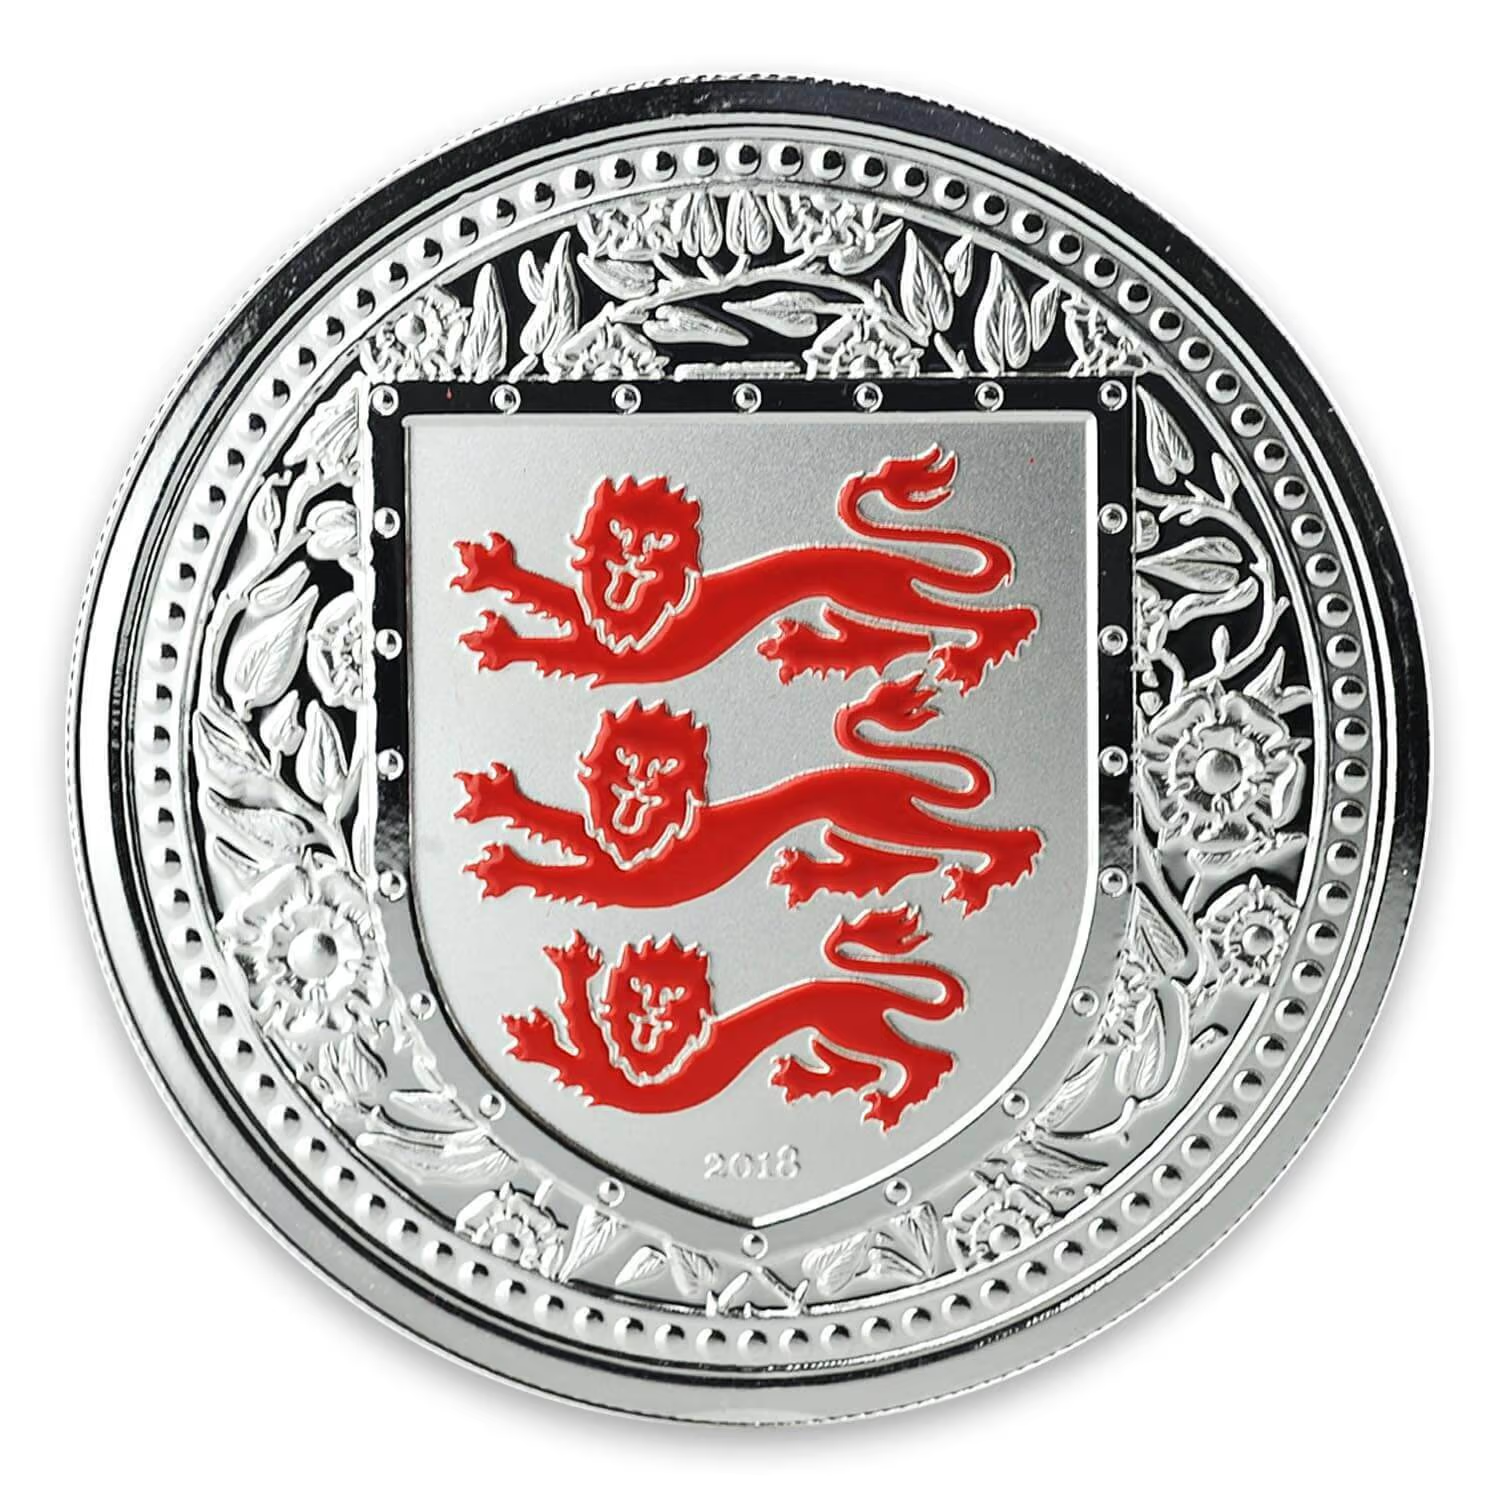 1 Oz Silver Coin 2018 Gibraltar £2 Royal Arms of England Color Proof - Red-classypw.com-1